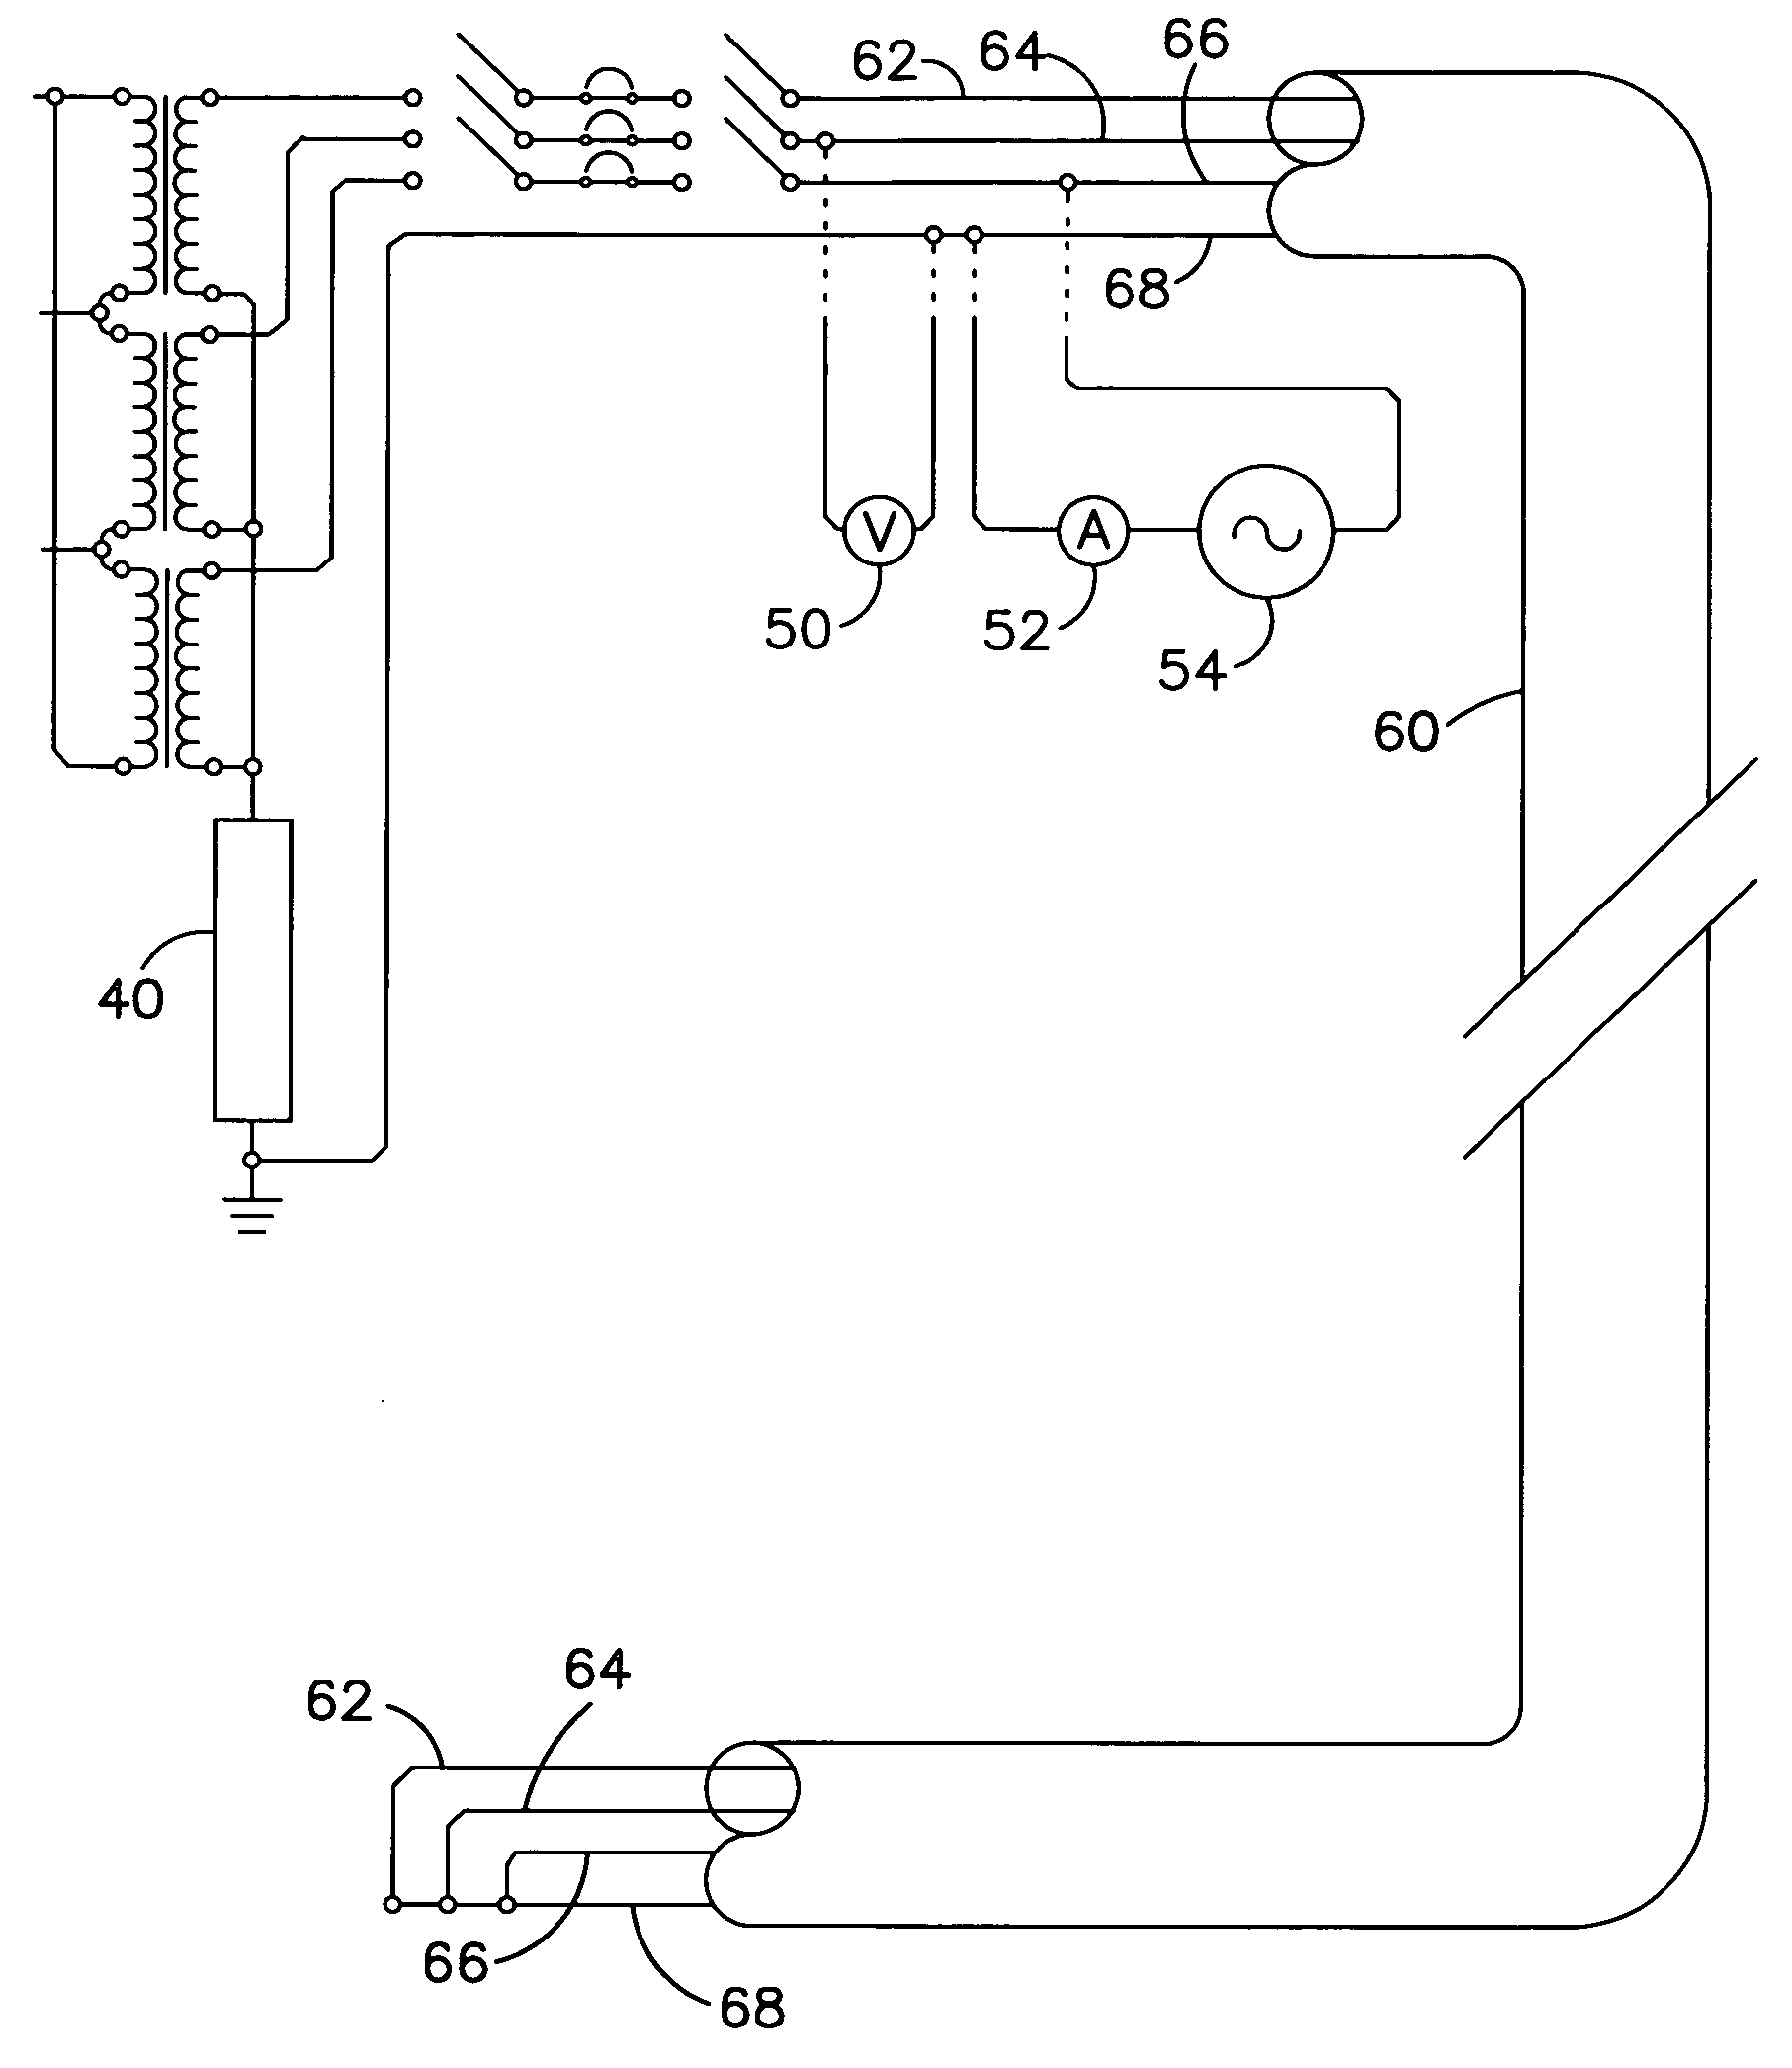 Ground circuit impedance measurement apparatus and method